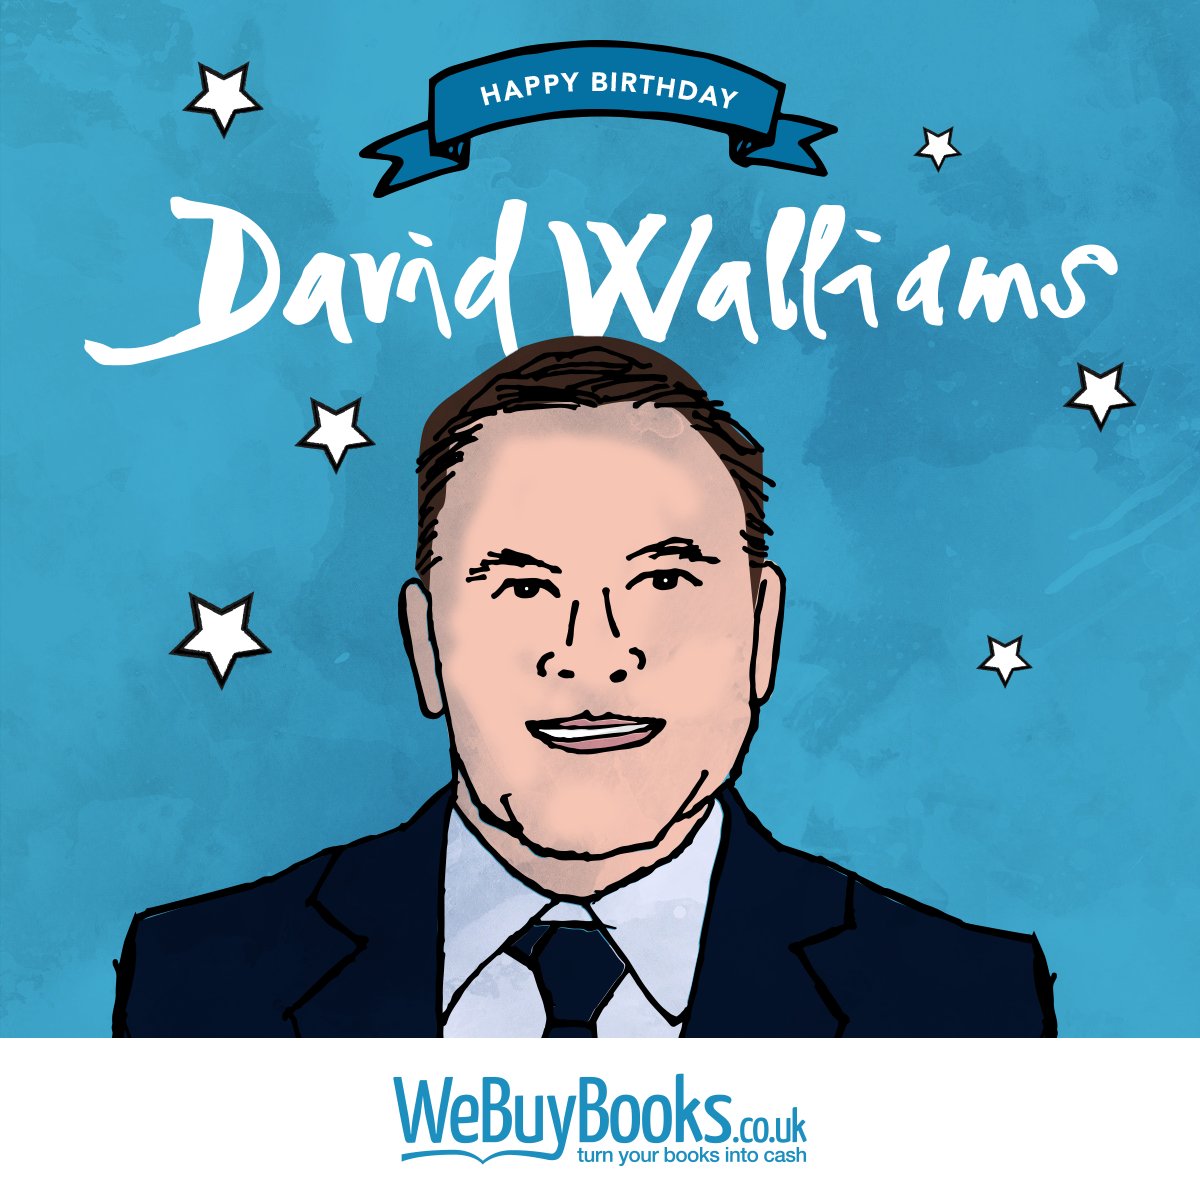 Happy Birthday David Walliams!  